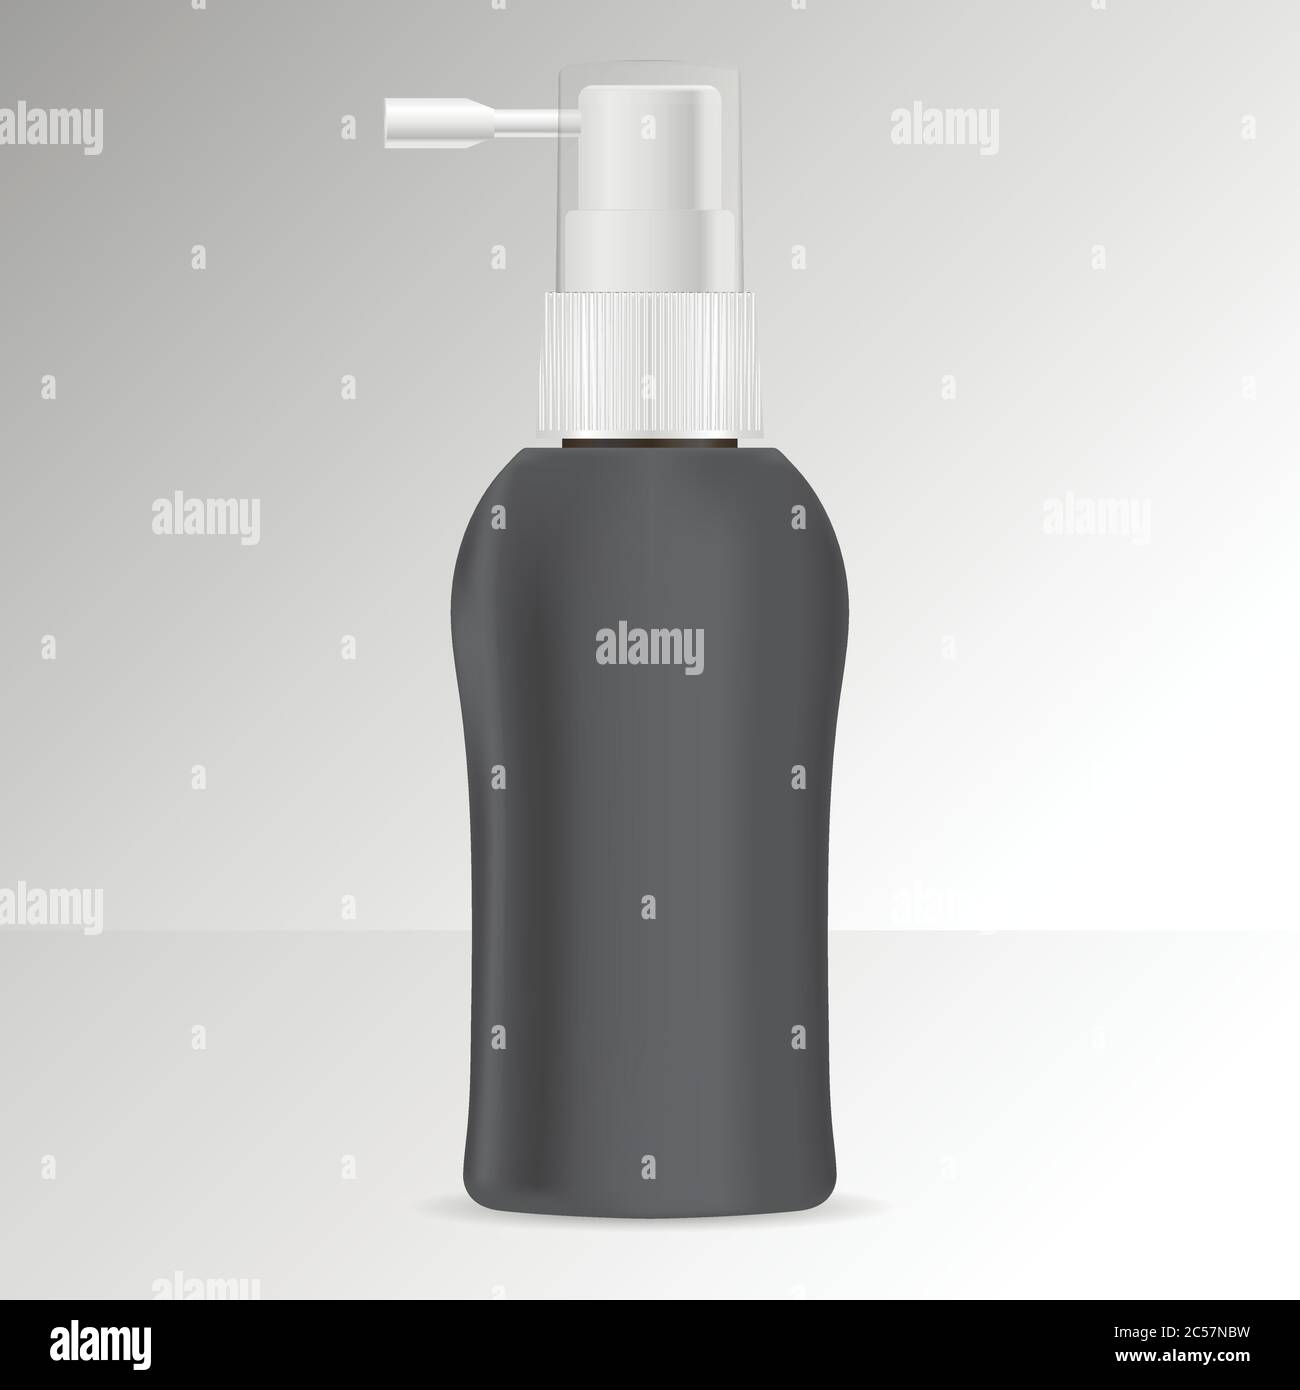 Haarwasser Flasche Mock up mit Spray Spender. Vektorgrafik. Kosmetik oder Medizin Paket. Stock Vektor